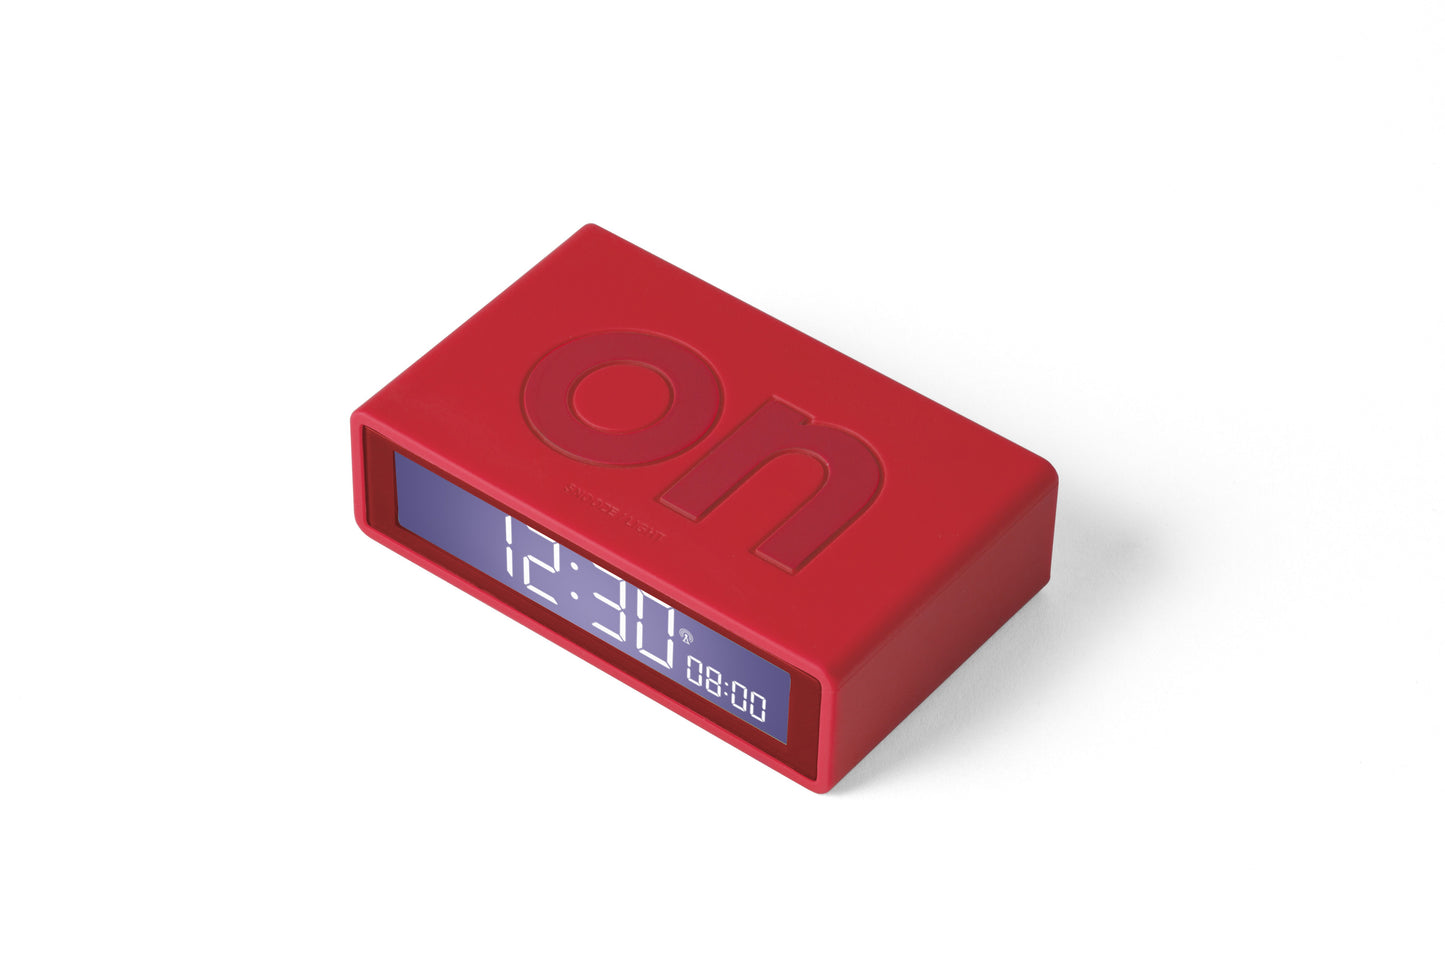 Lexon Flip + Reversible LCD Alarm Clock